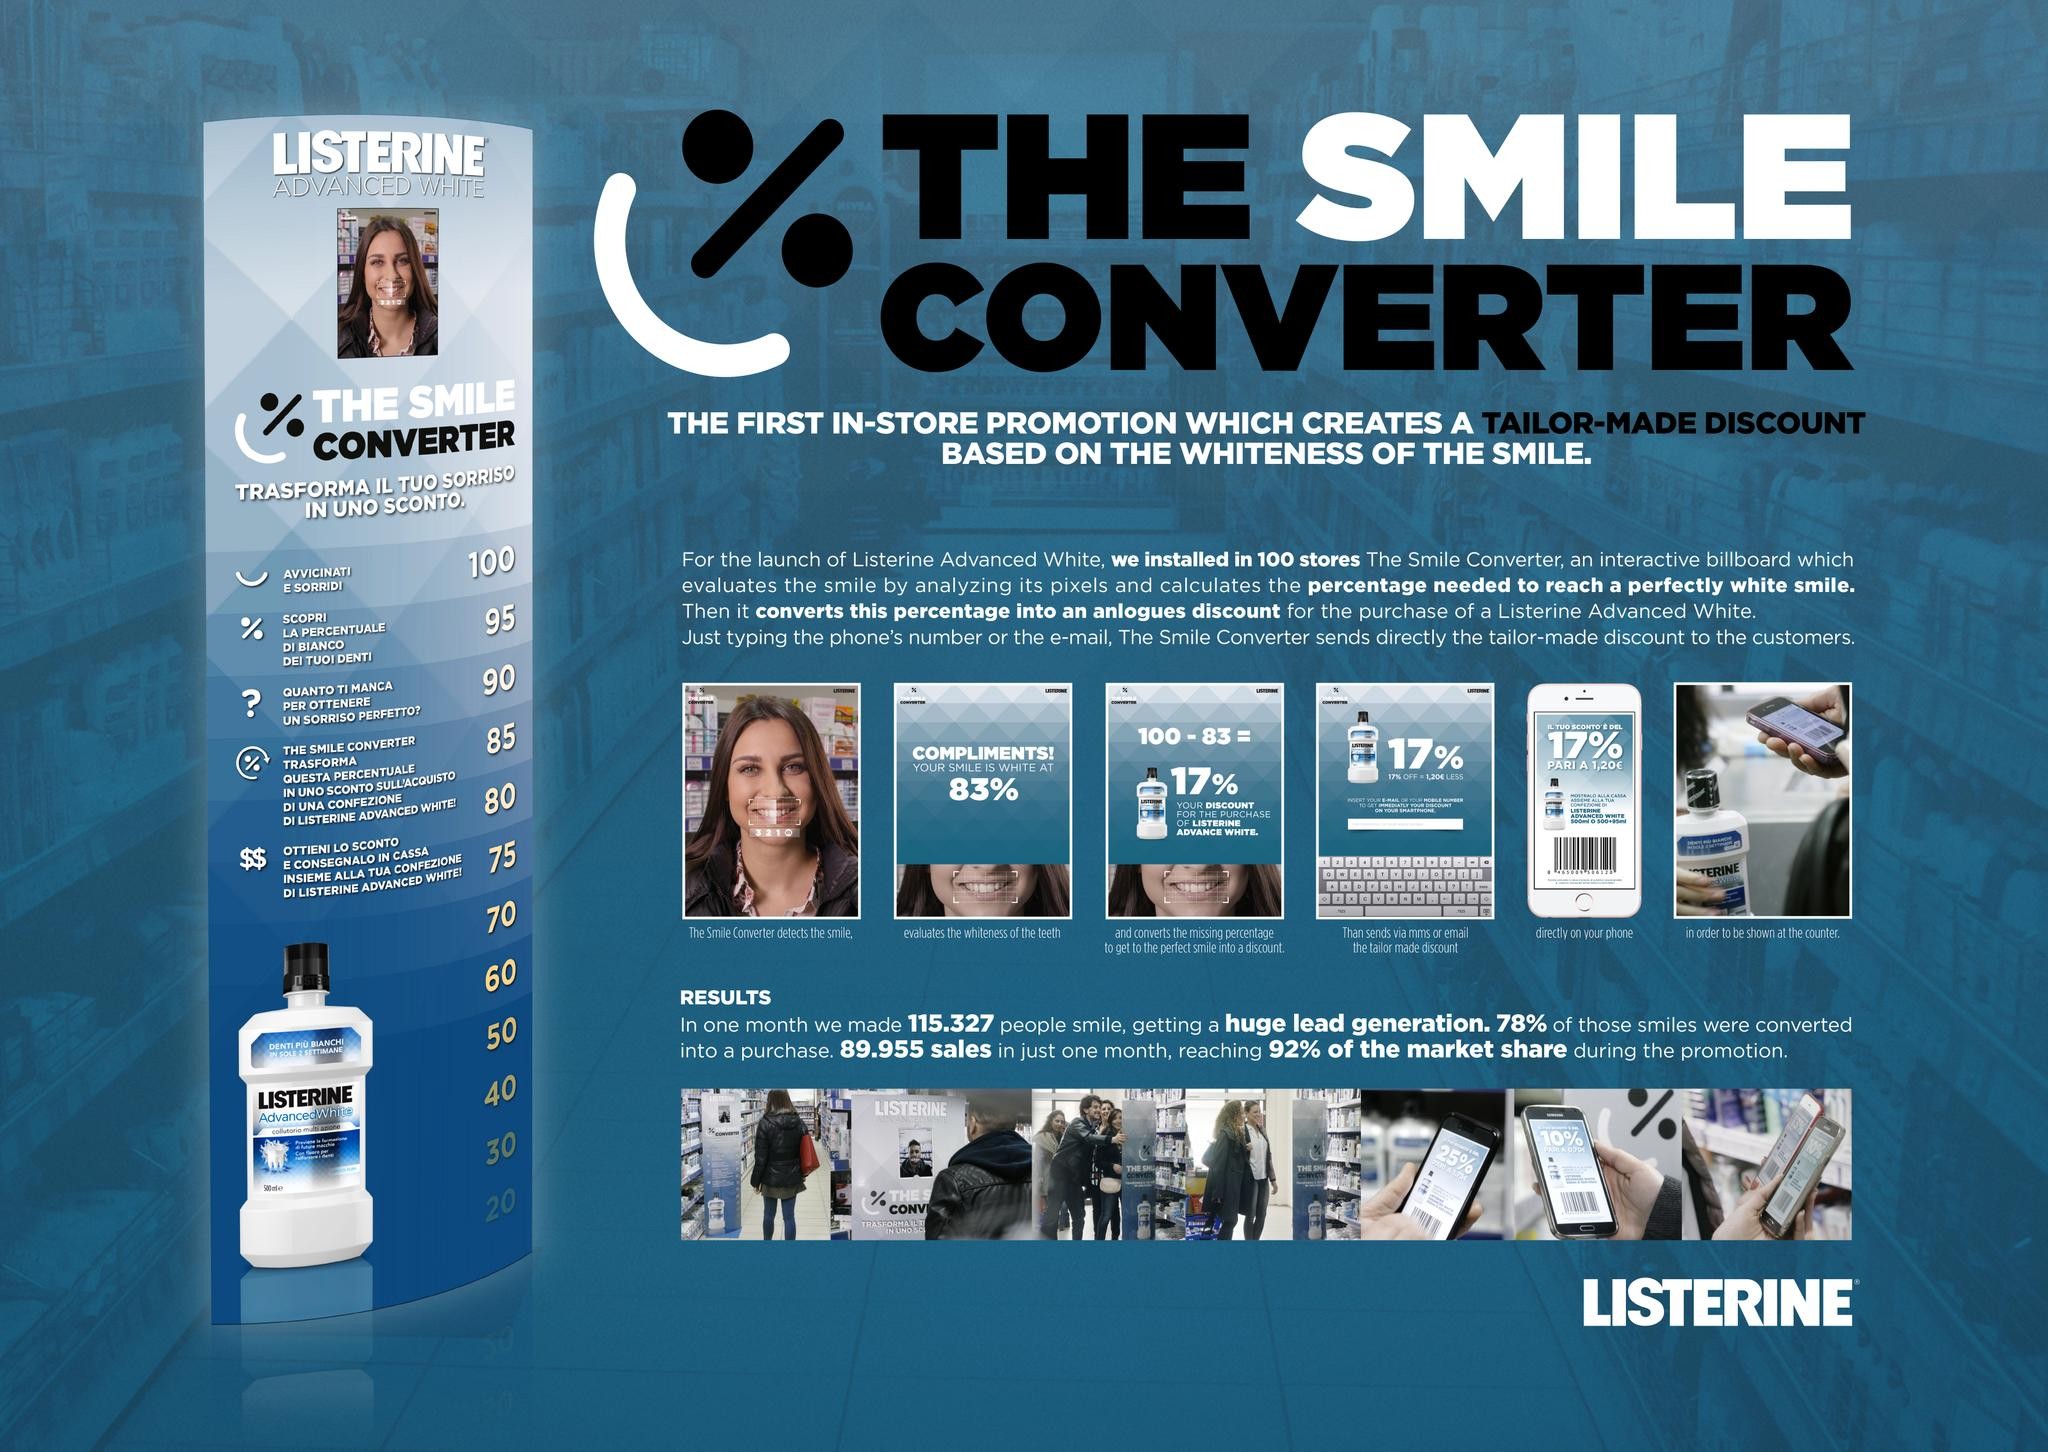 The Smile Converter